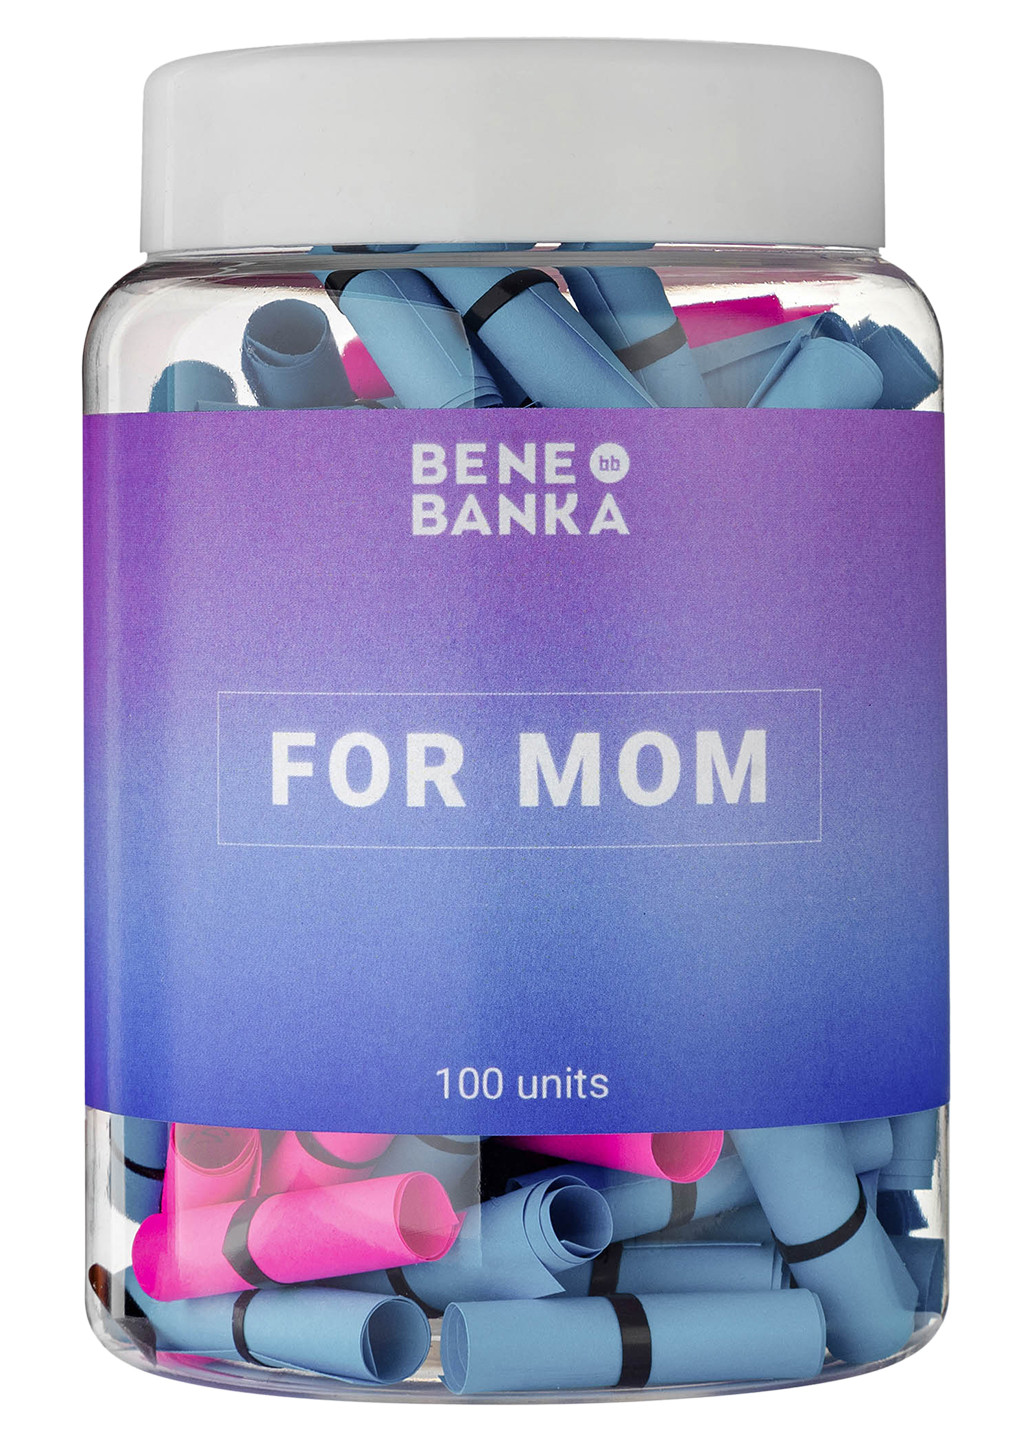 Баночка с записками "For Mom" английский язык Bene Banka (200653592)